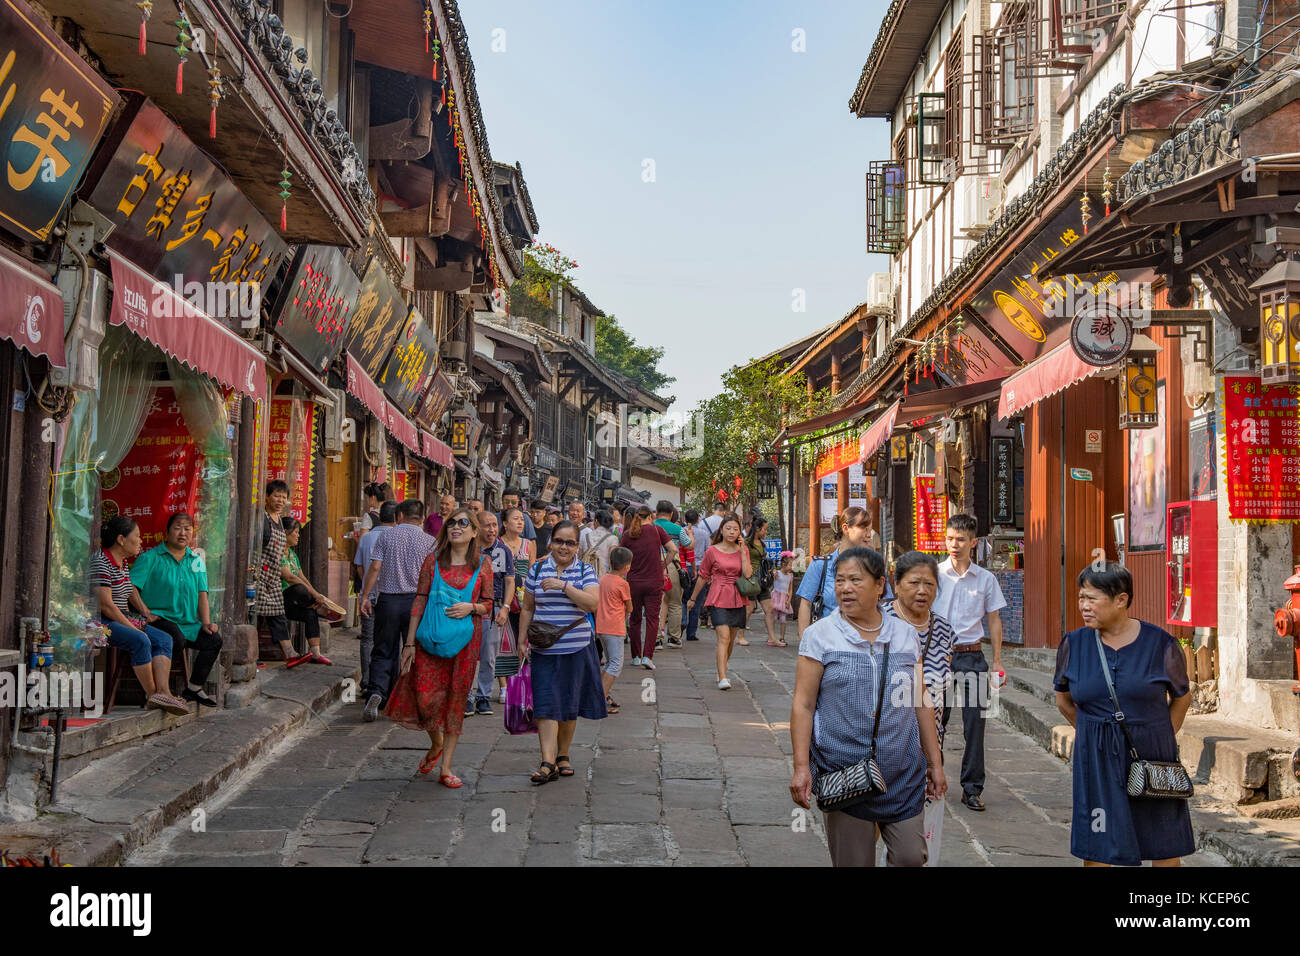 Rue de ciqikou ancient town, Chongqing, Chine Banque D'Images